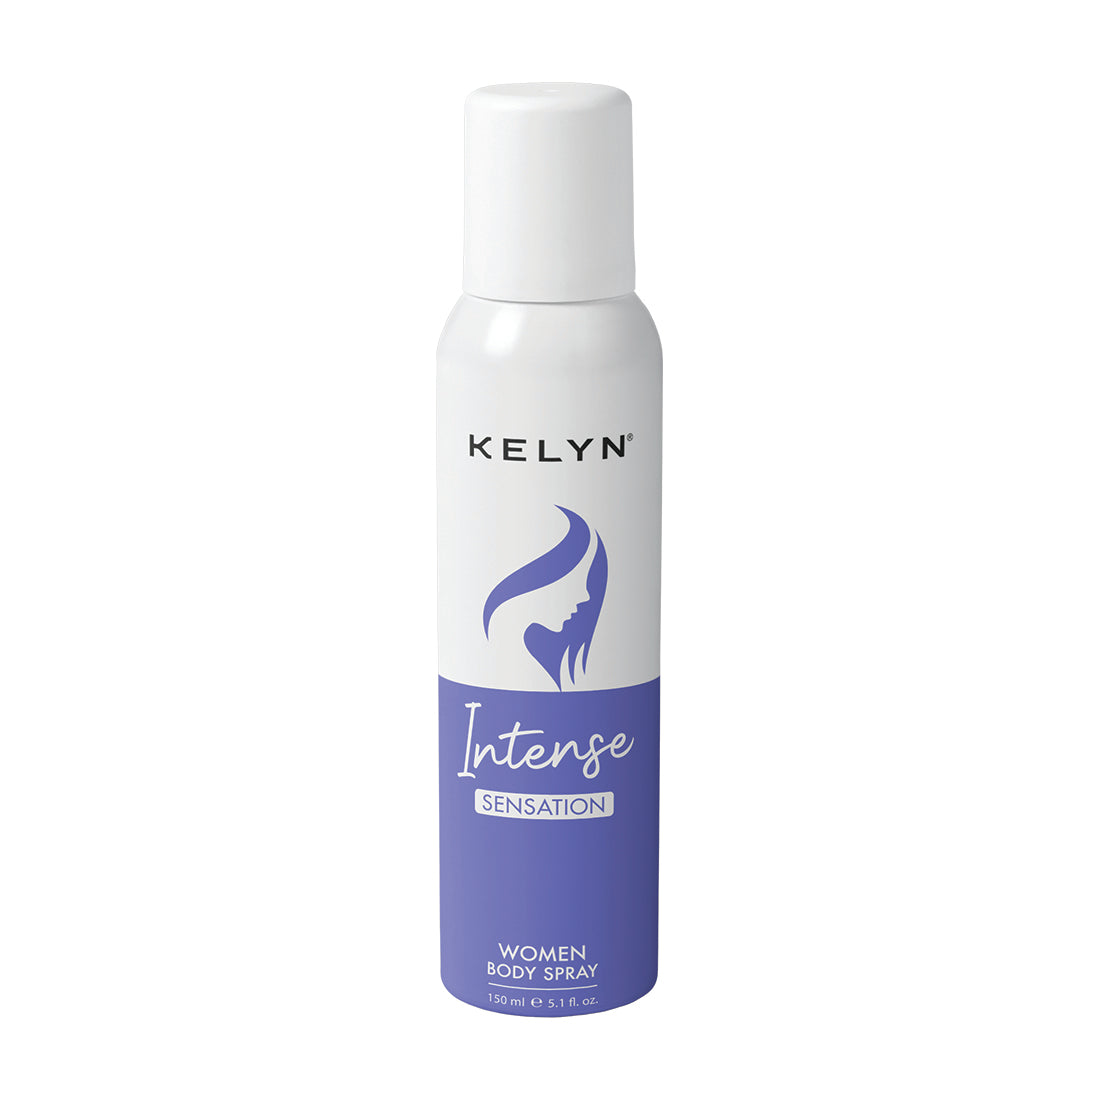 Intense Sensation Deodorant for Women Body Spray, 150 ml